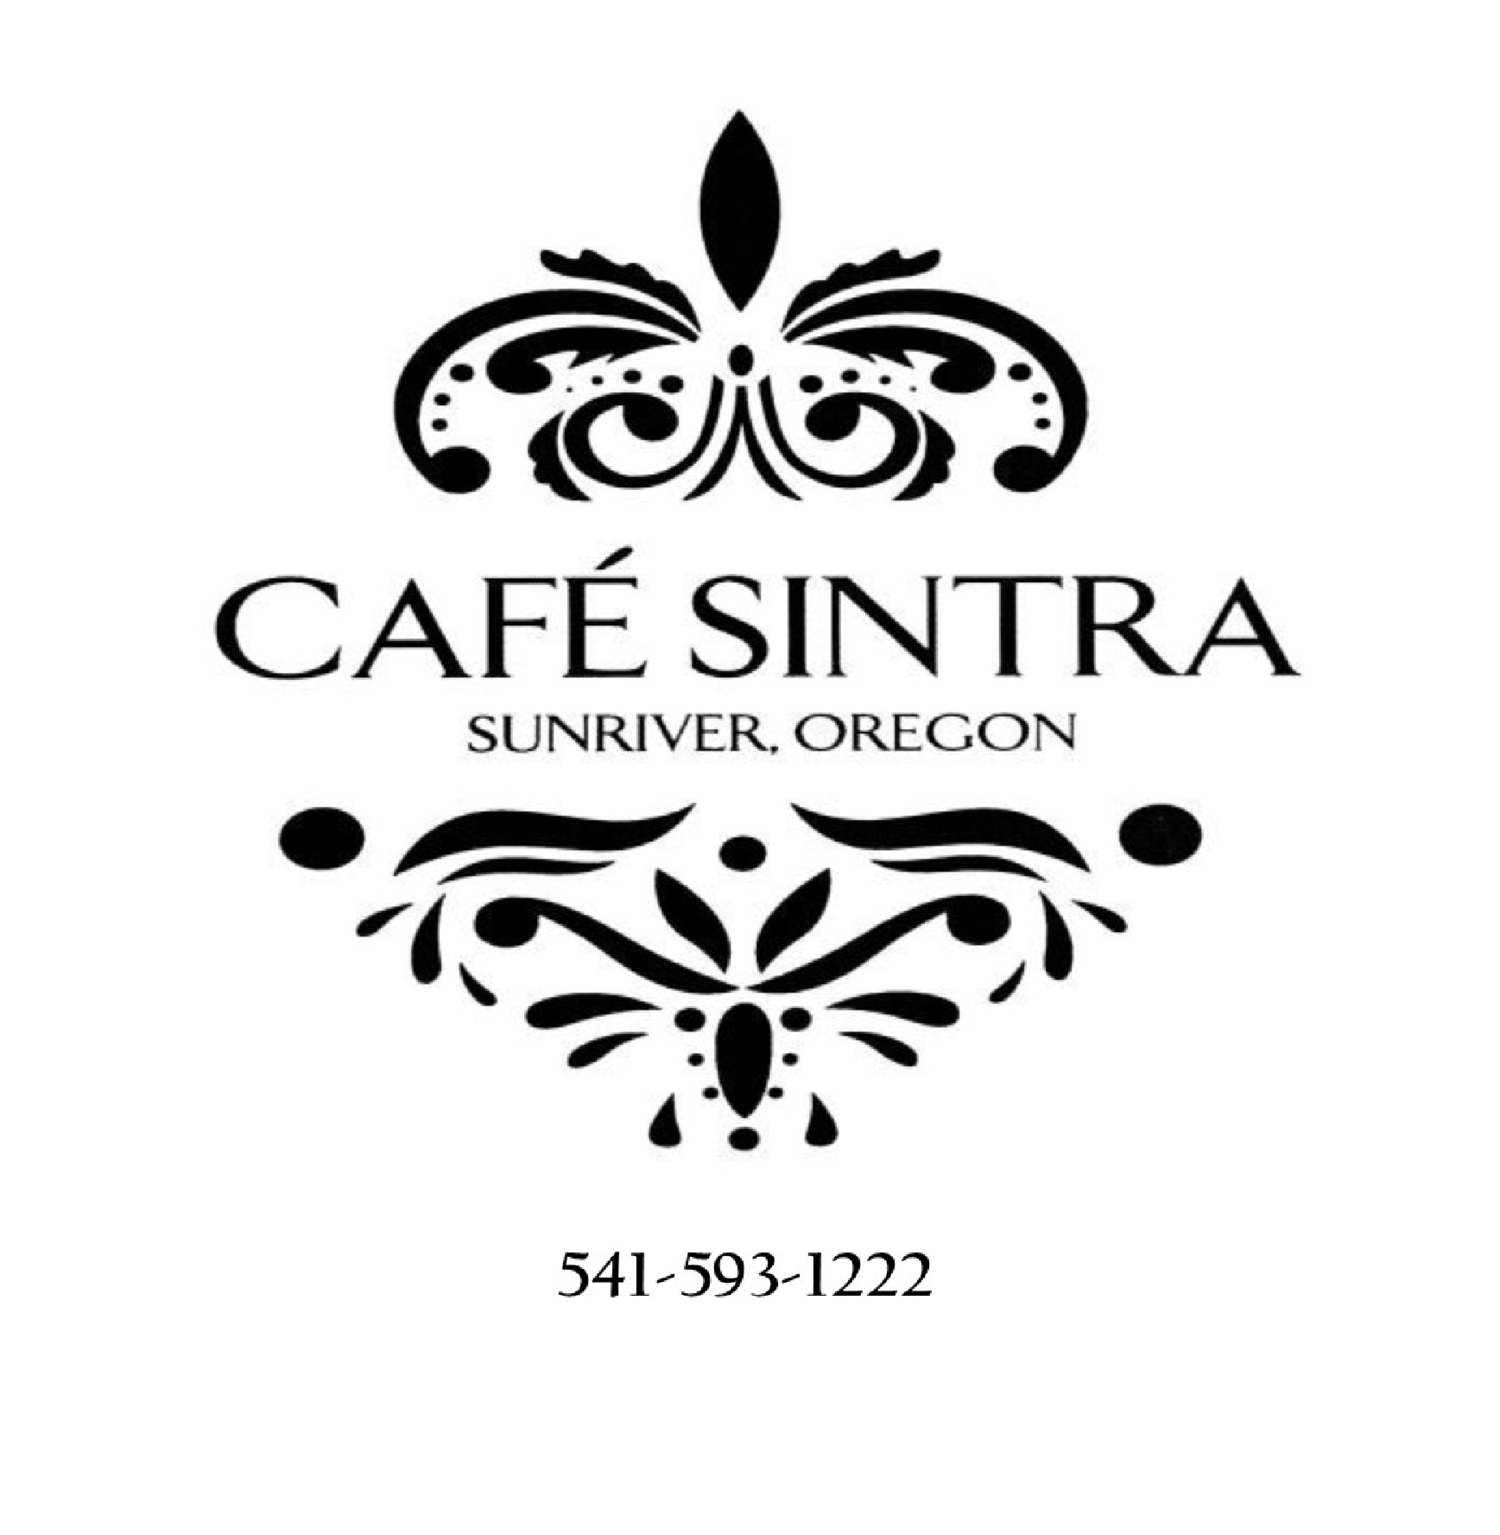 Cafe Sintra Sunriver